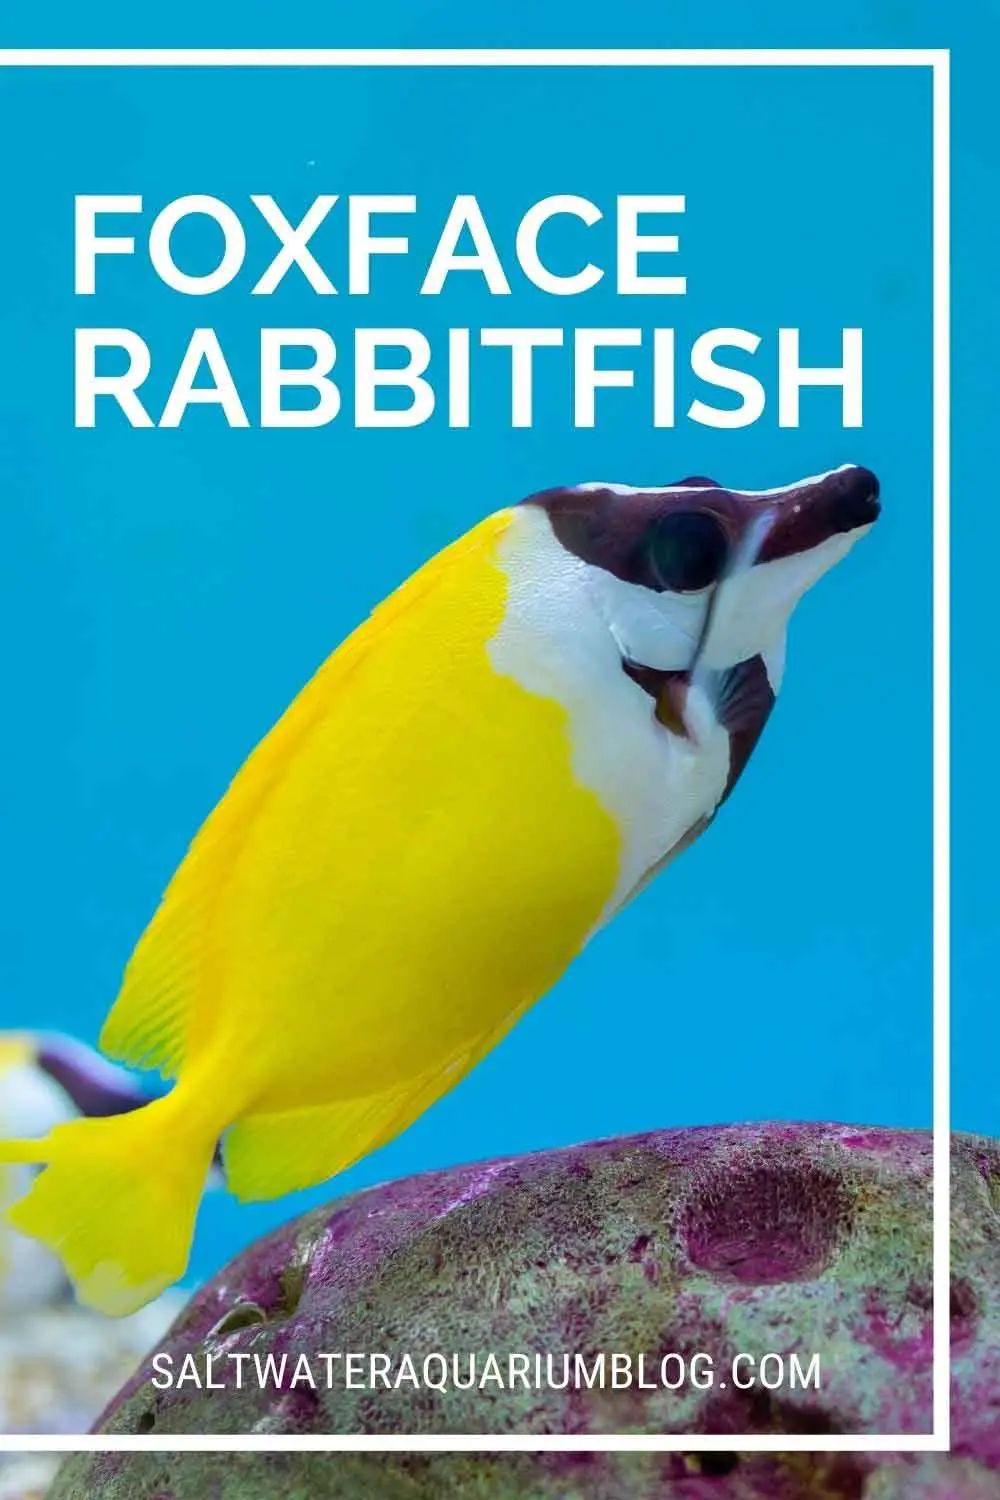 Foxface rabbitfish care guide